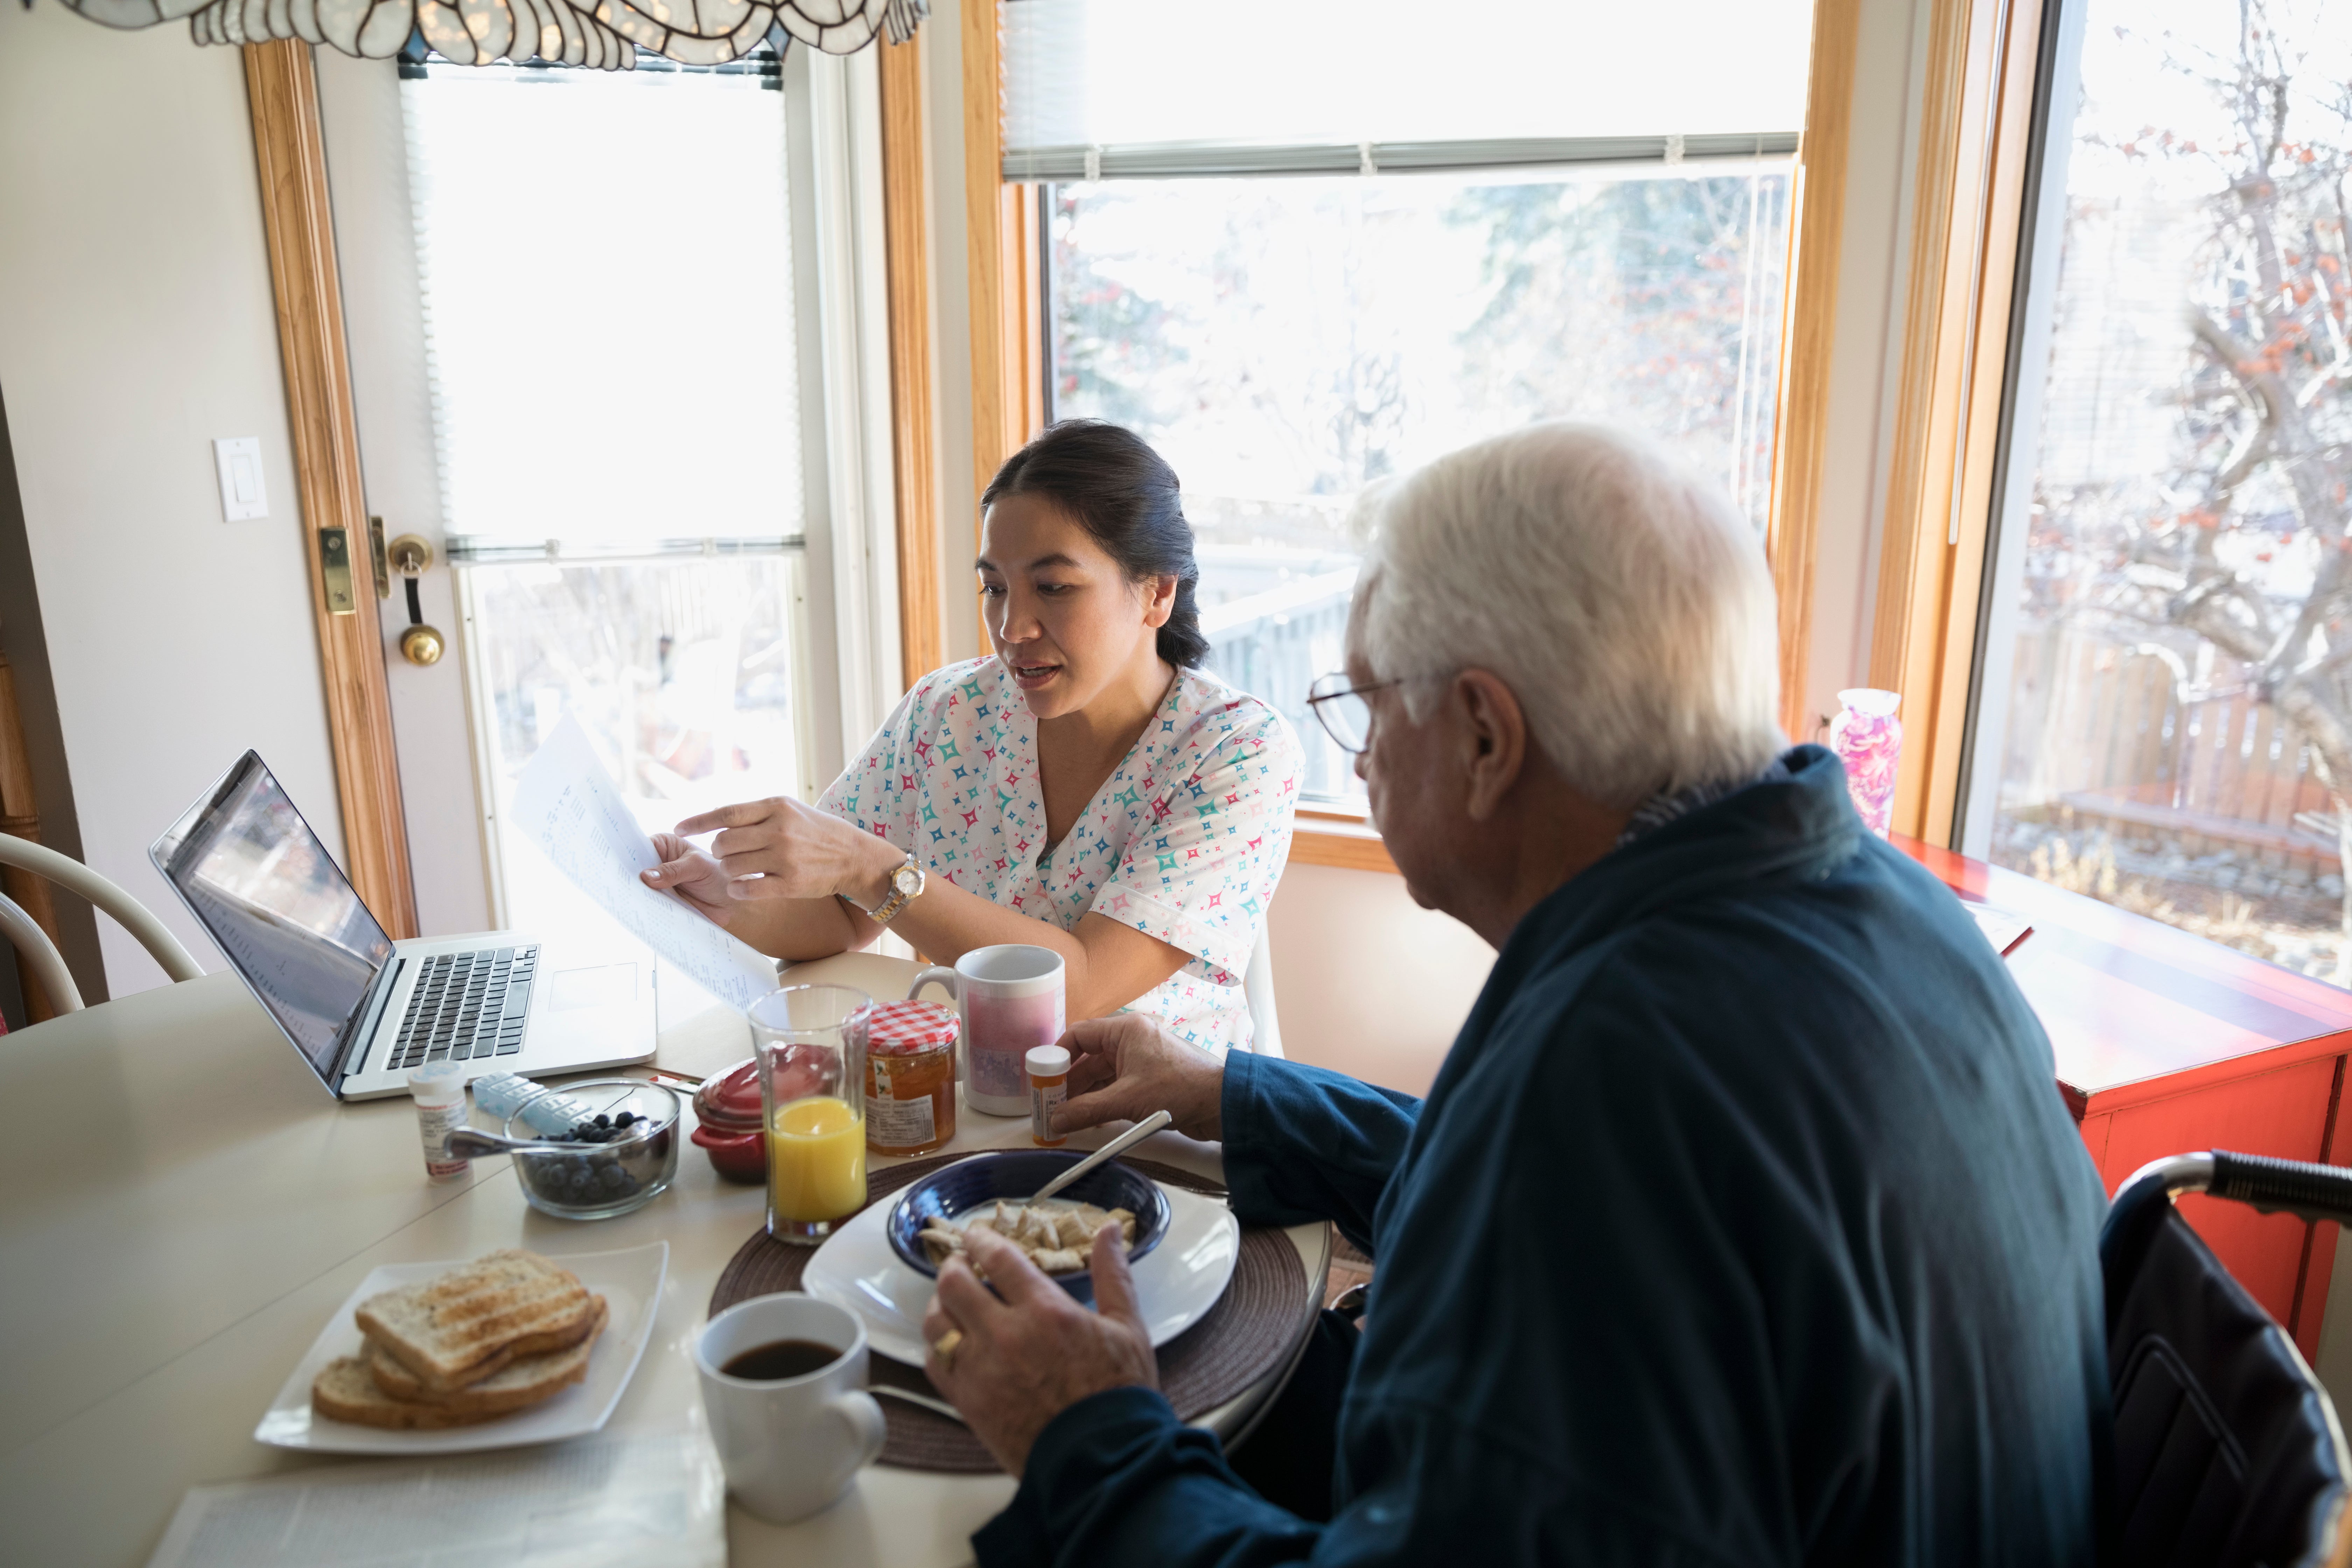 Home caregiver explaining paperwork to senior man eating breakfast at dining table